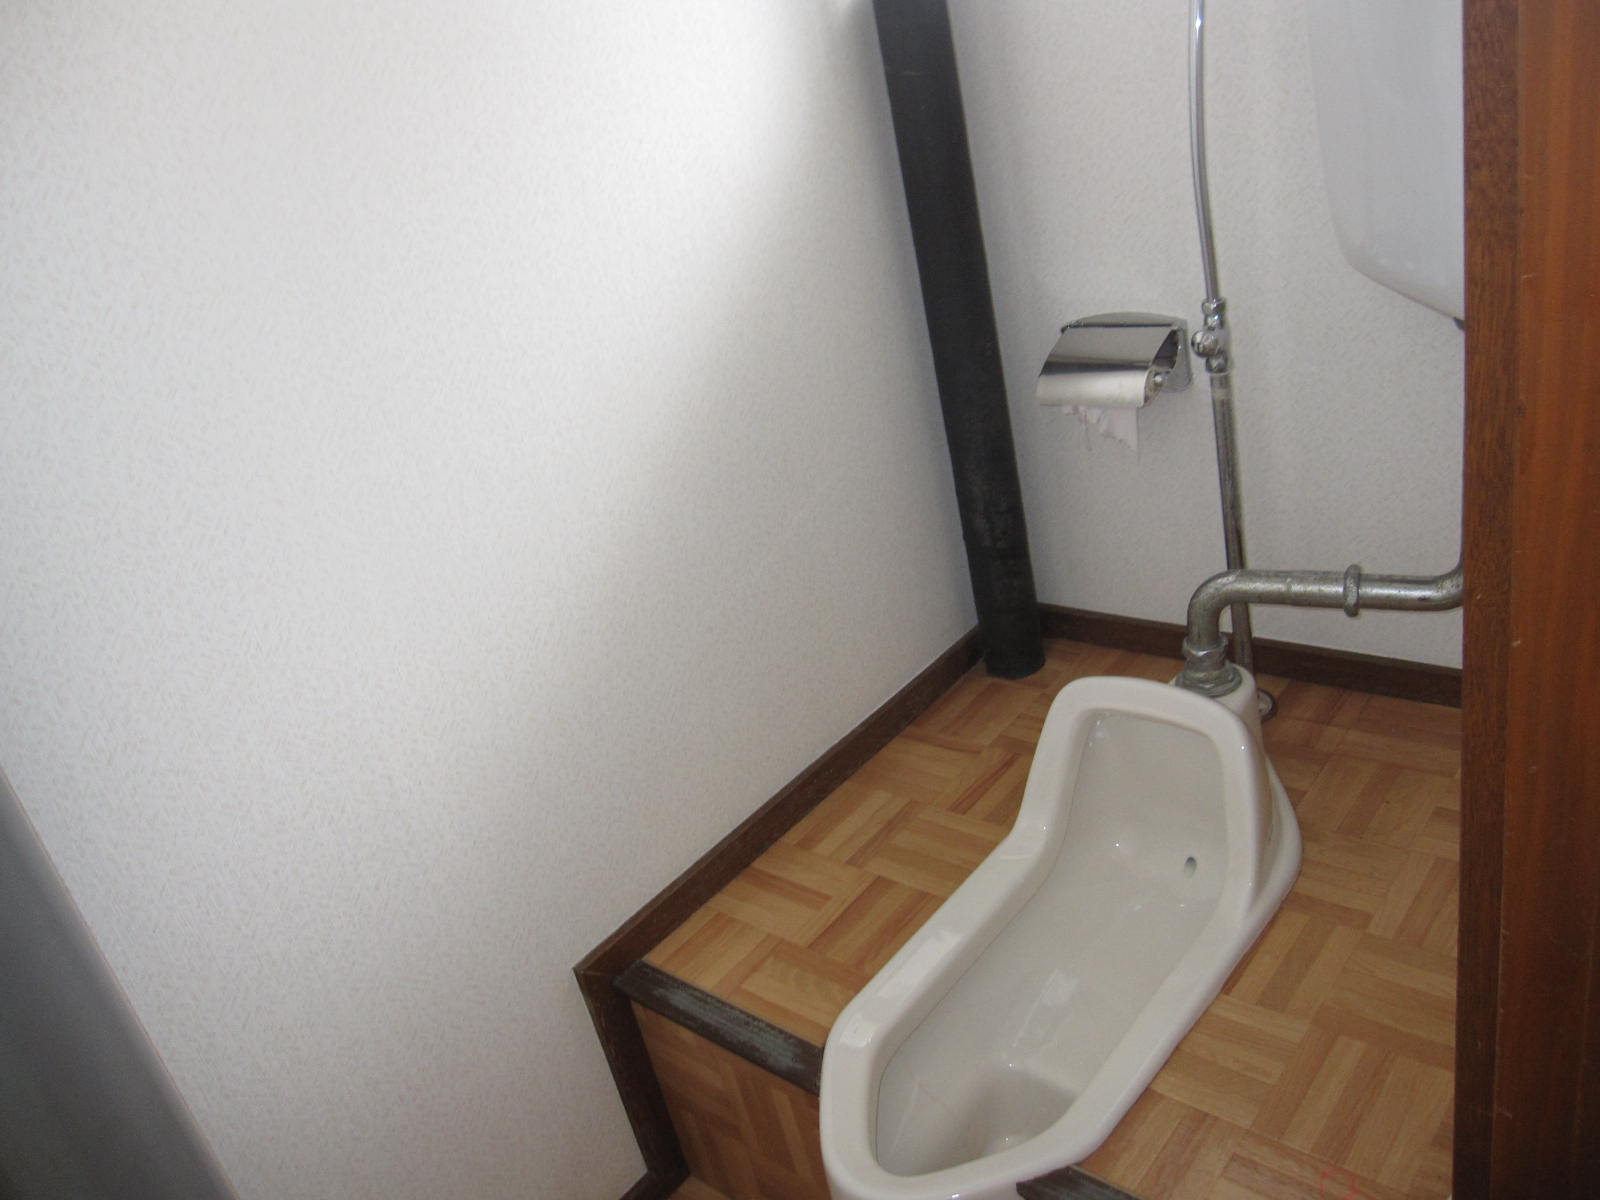 Toilet.  ・  ・  ・ Once upon a time of nostalgia Japanese-style toilet?